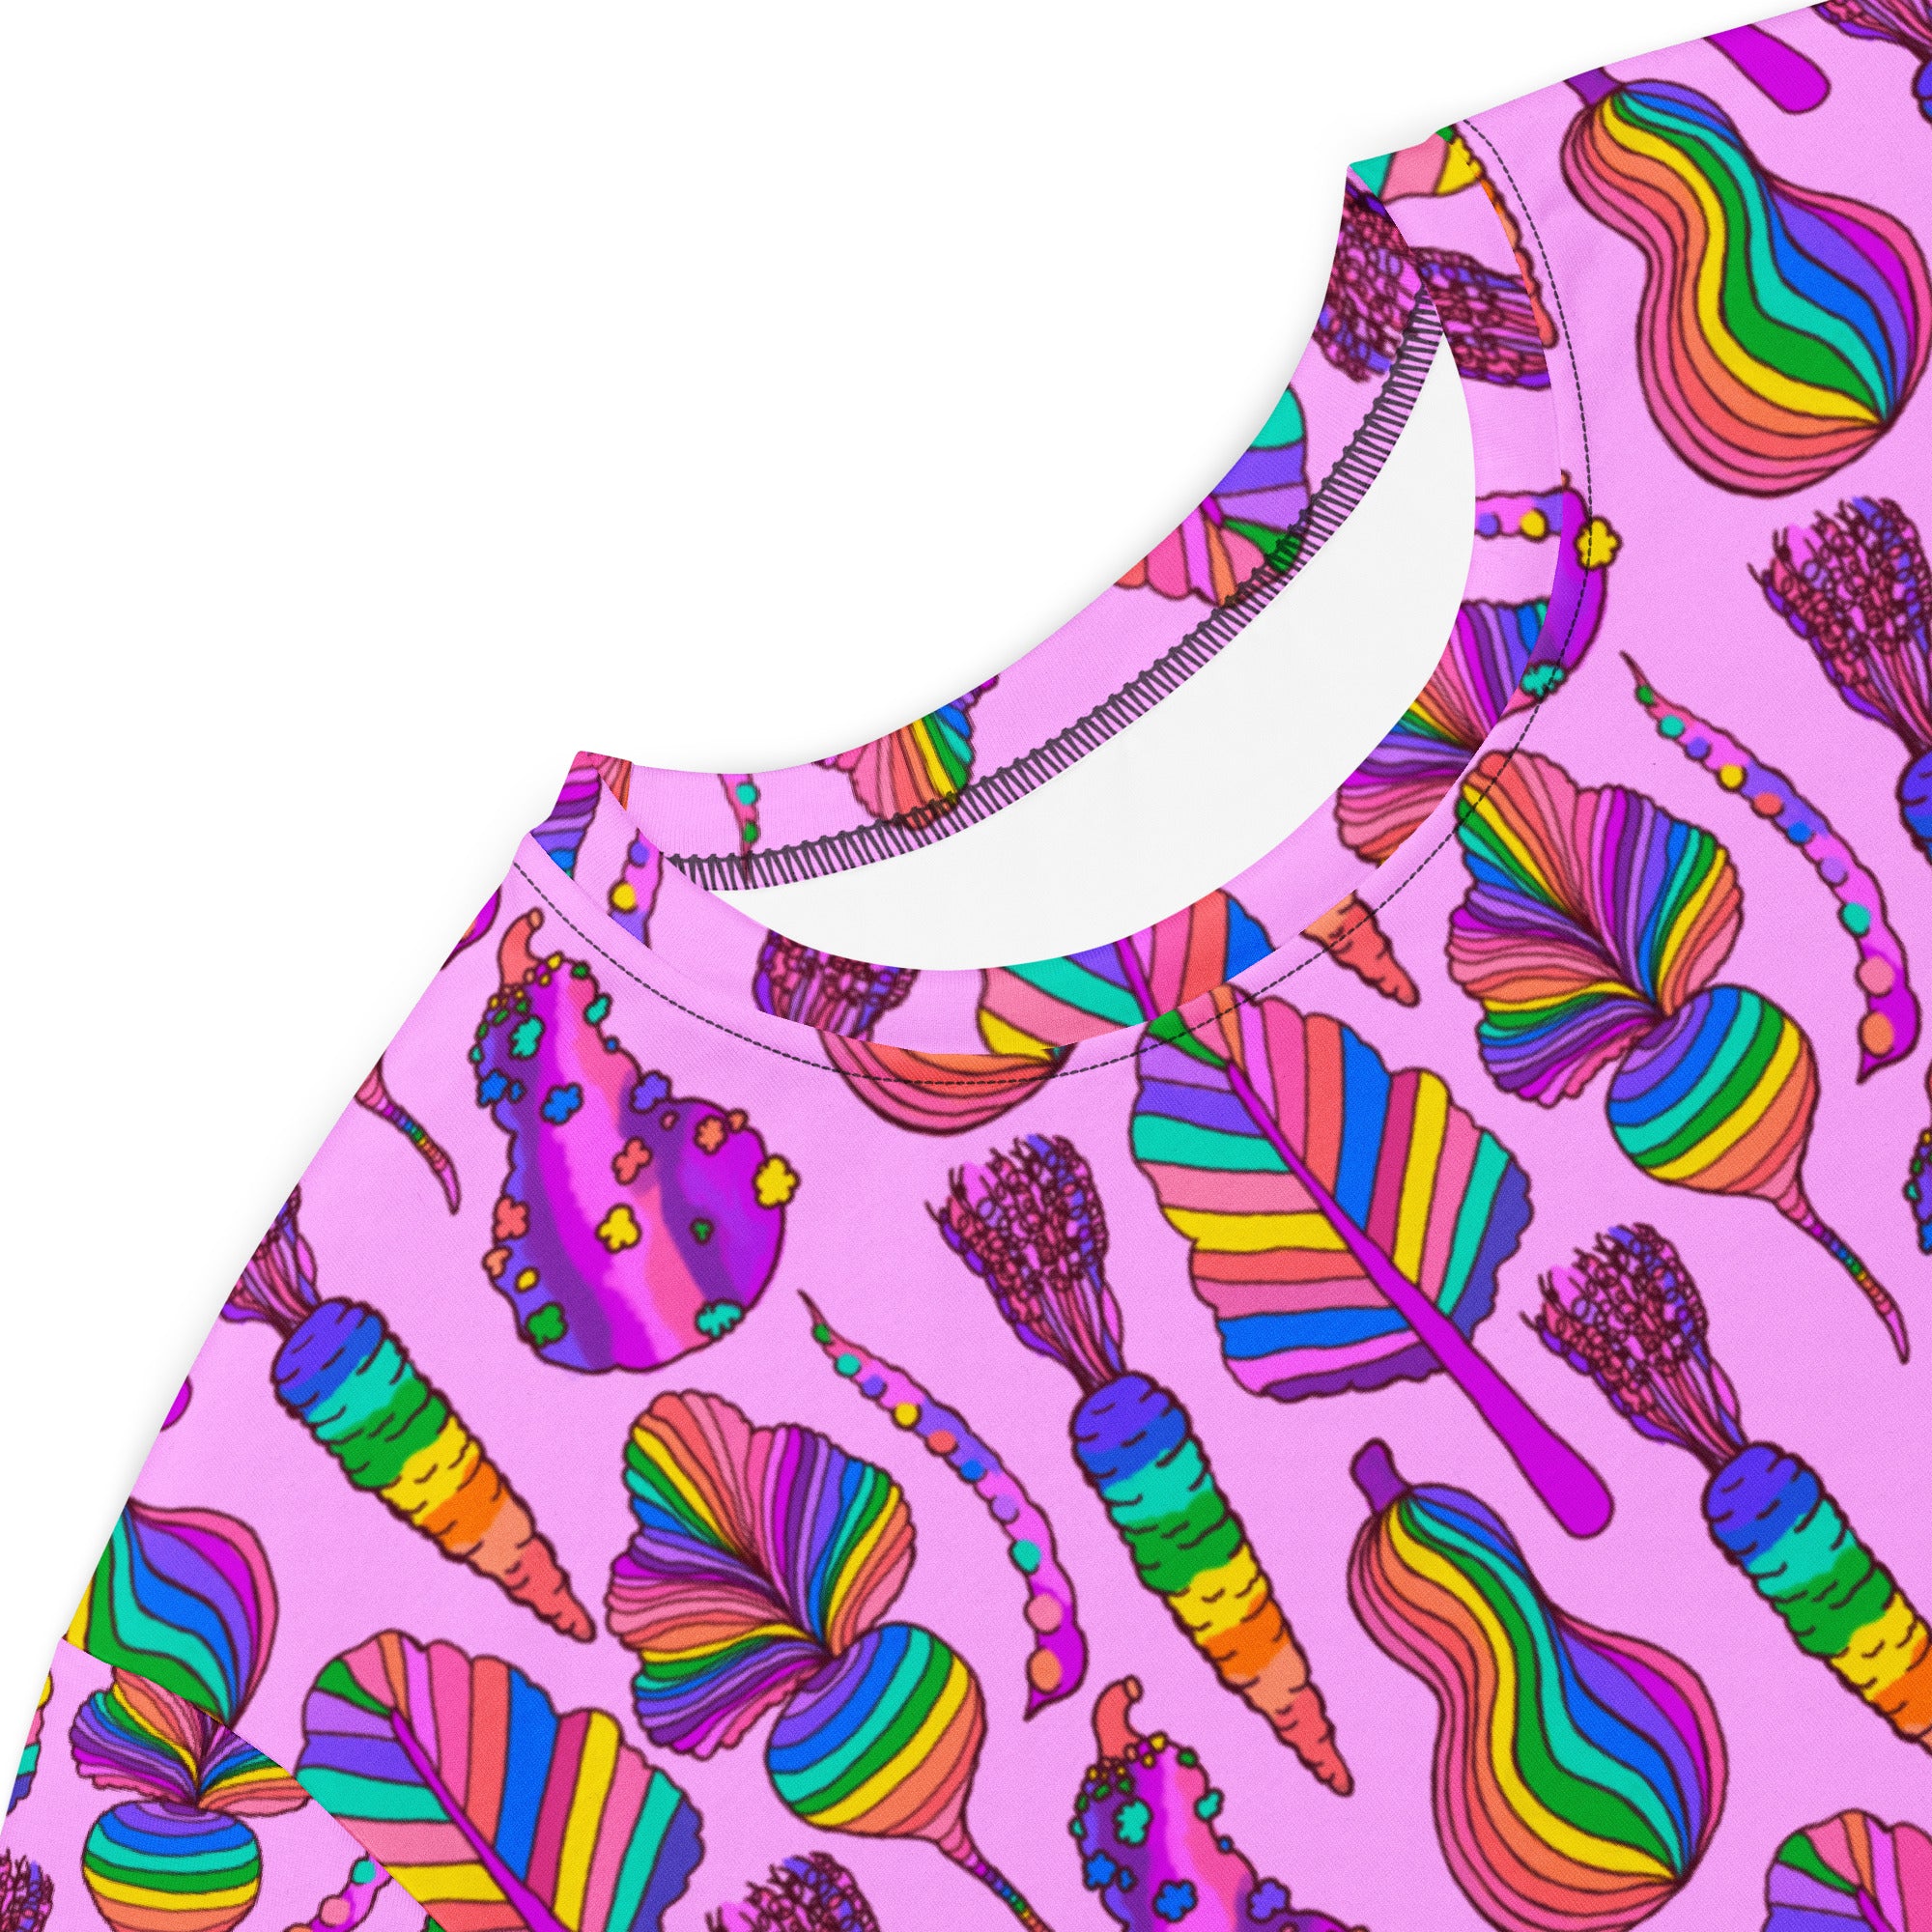 Rainbow Veggies T-shirt Dress